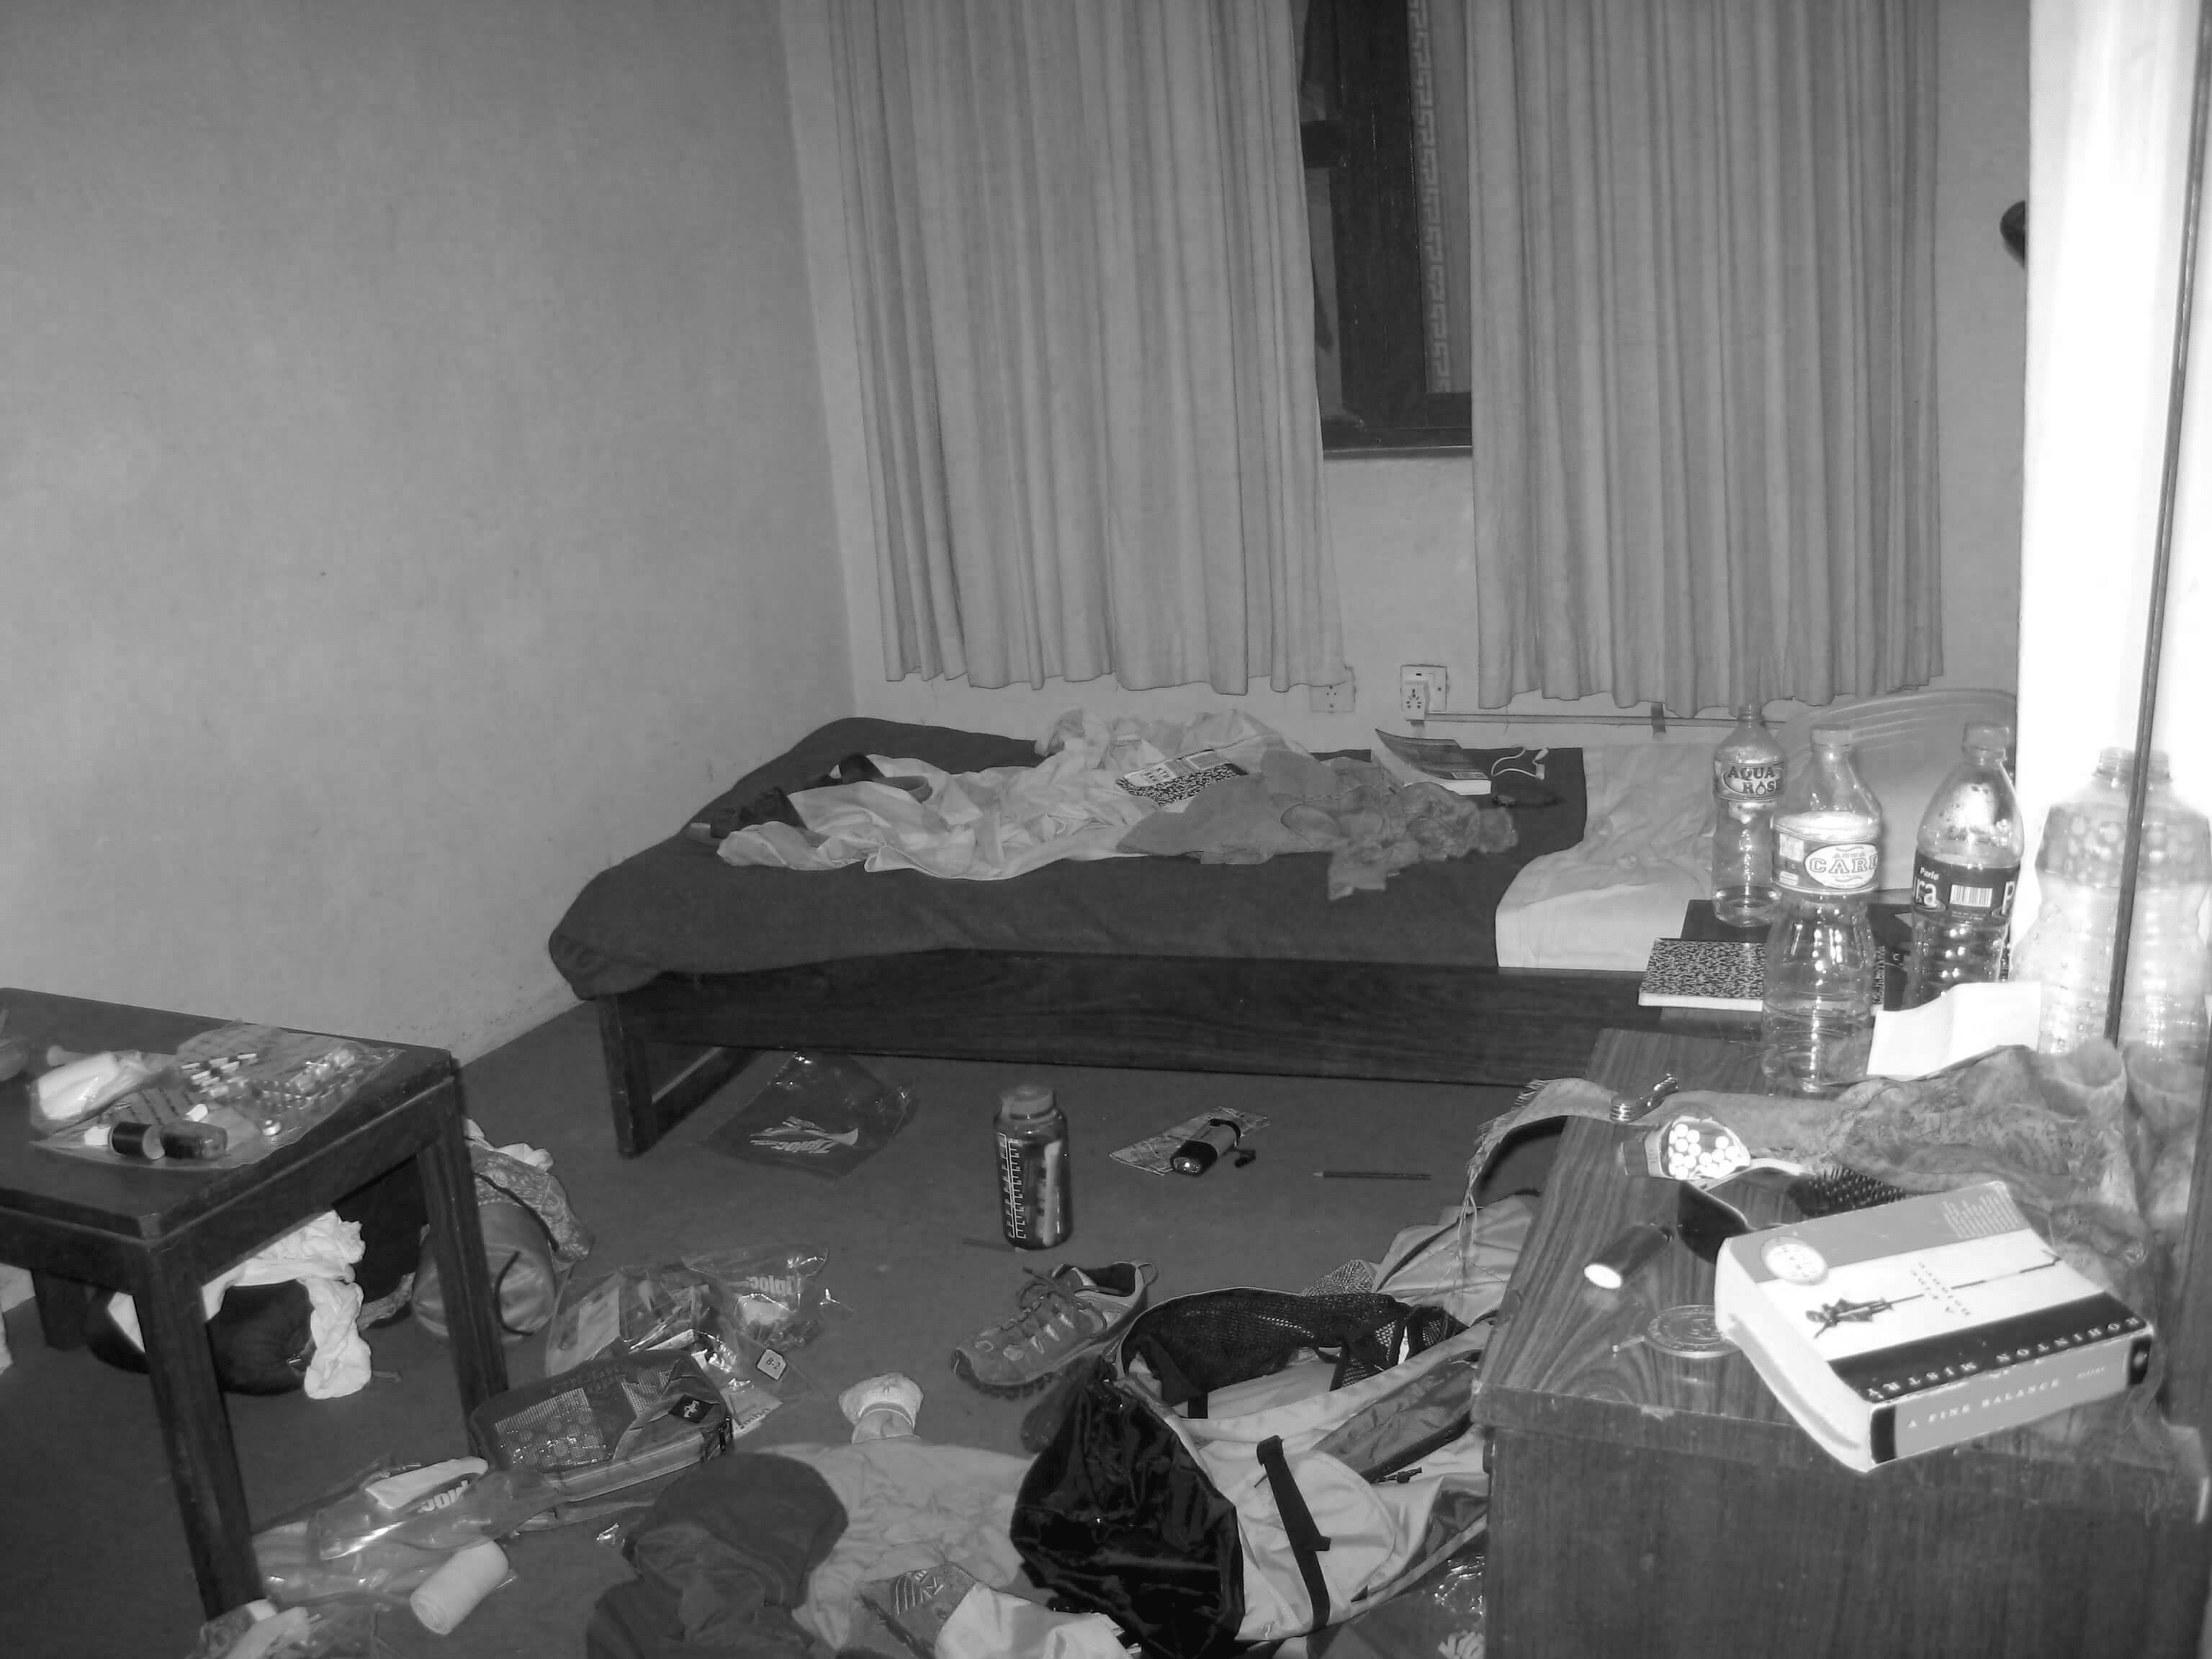 Dirty room